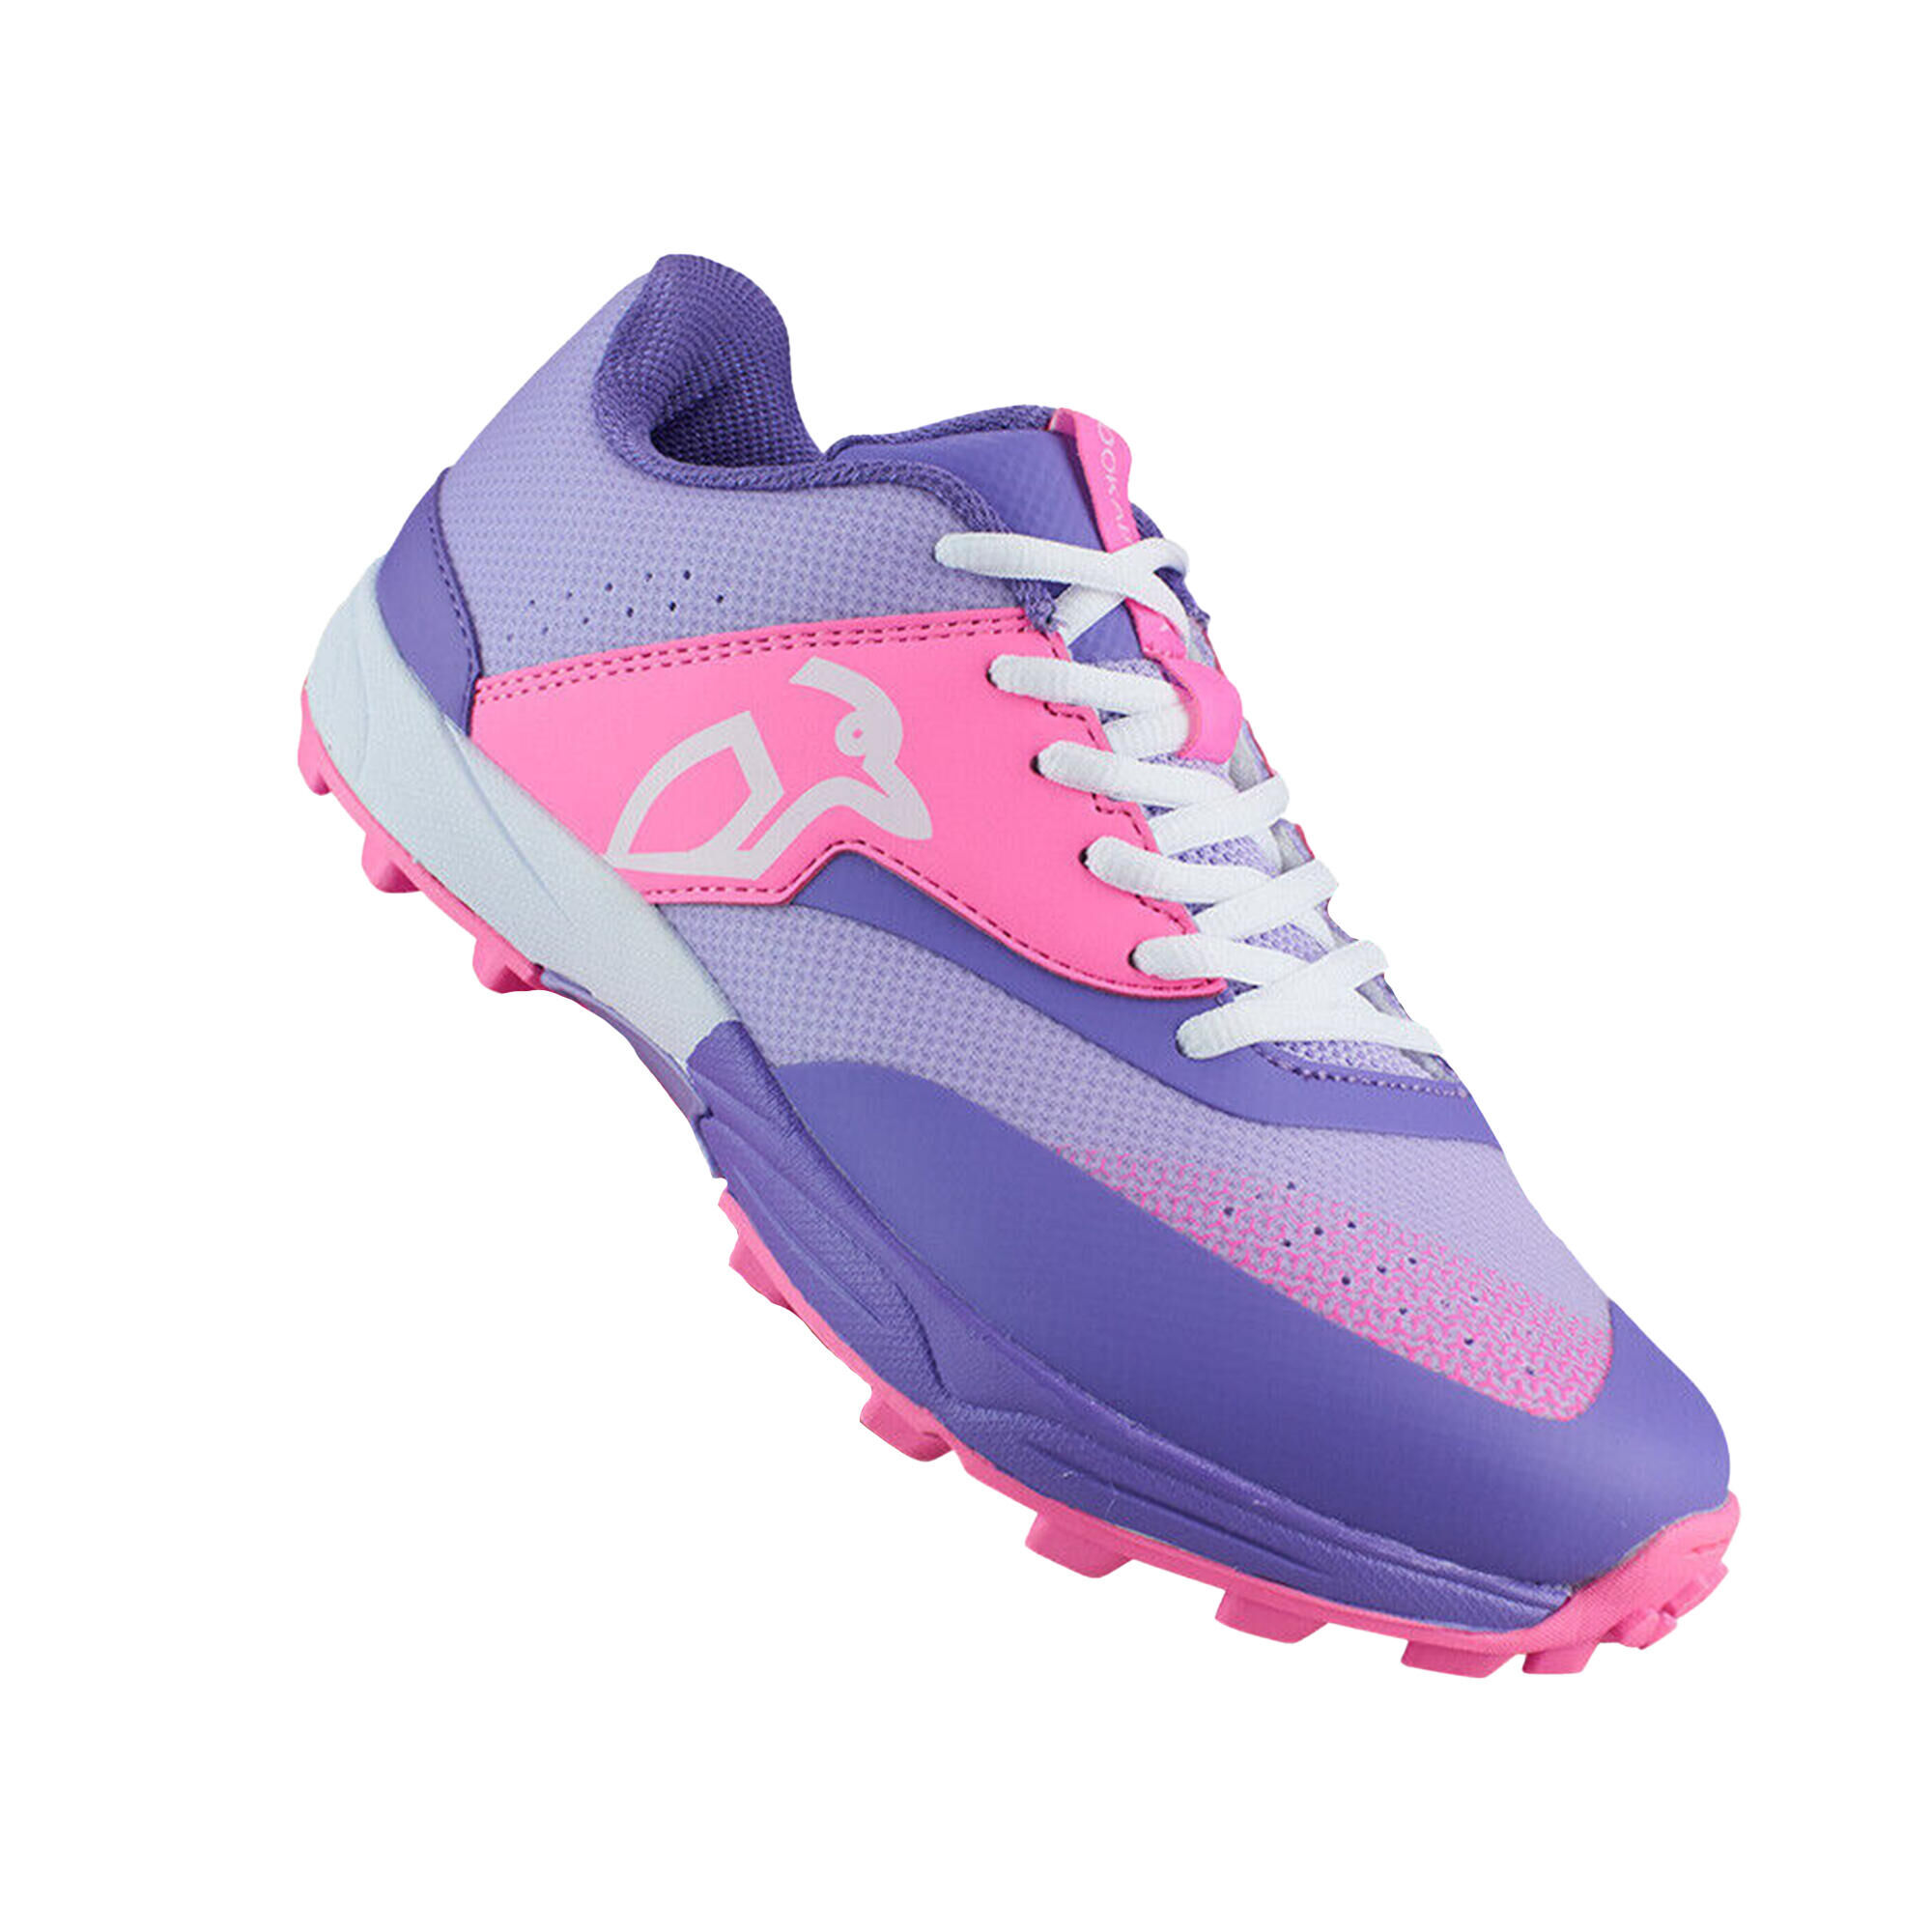 KOOKABURRA Womens/Ladies Hockey Shoes (Dusky Purple/Lilac/Pink)